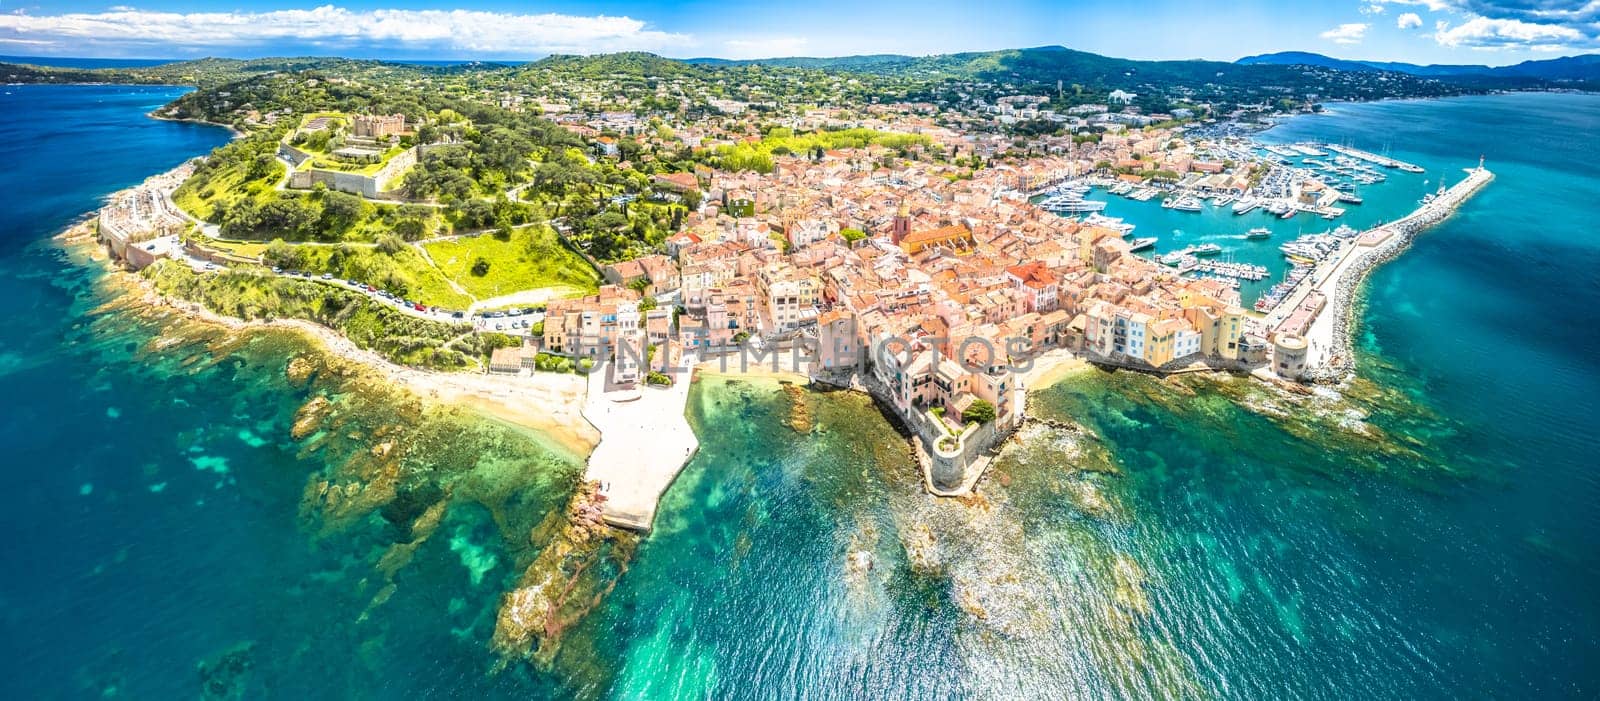 Saint Tropez village fortress and landscape aerial panoramic view, famous tourist destination on Cote d Azur, Alpes-Maritimes department in southern France